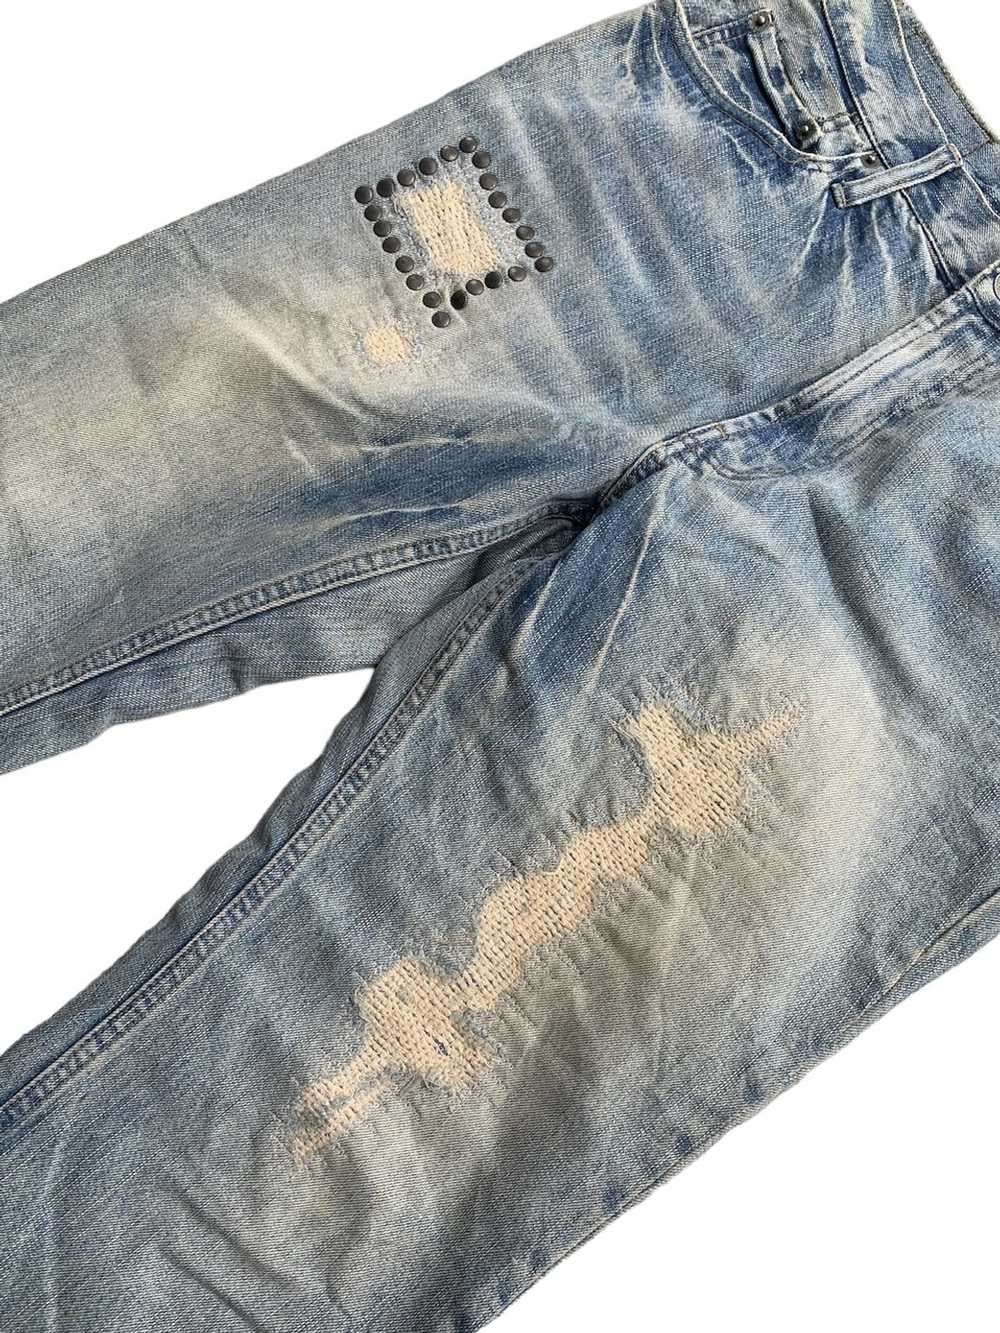 PPFM PPFM Distressed Denim Jeans - image 5